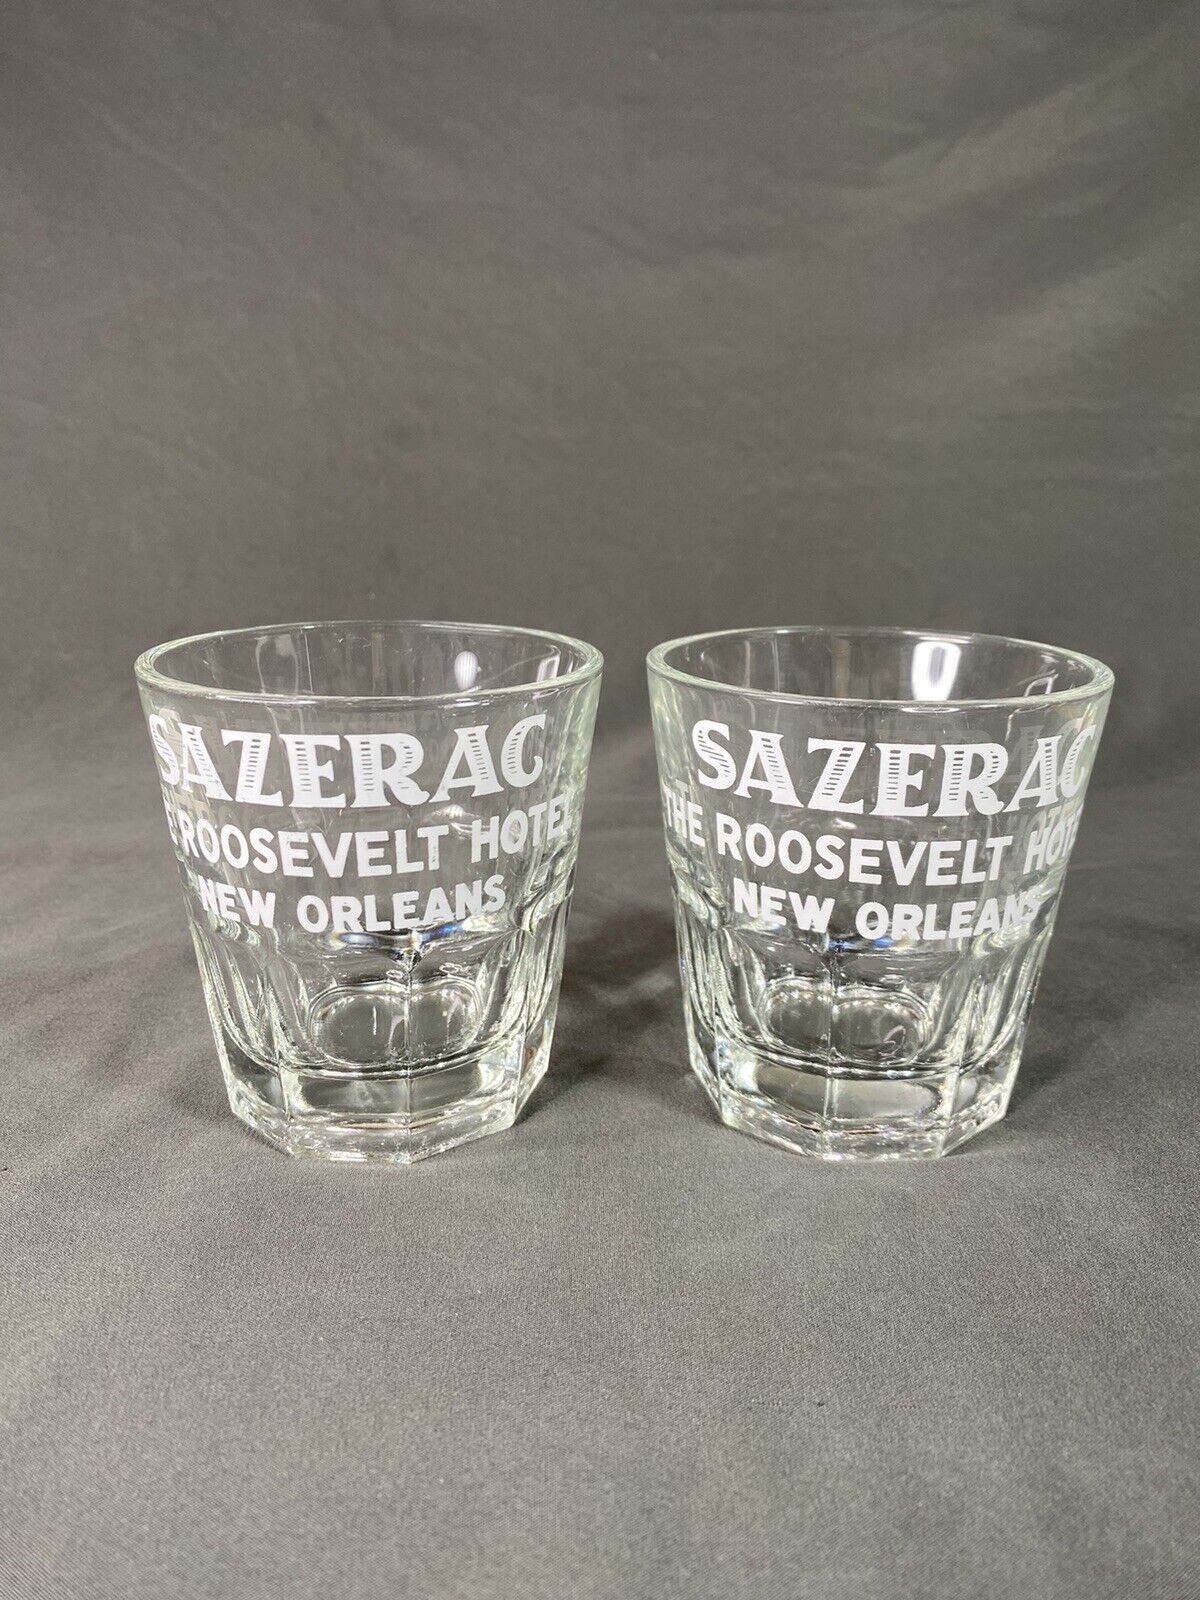 2 Vintage Antique Sazerac The Roosevelt Hotel New Orleans Bar glasses *READ